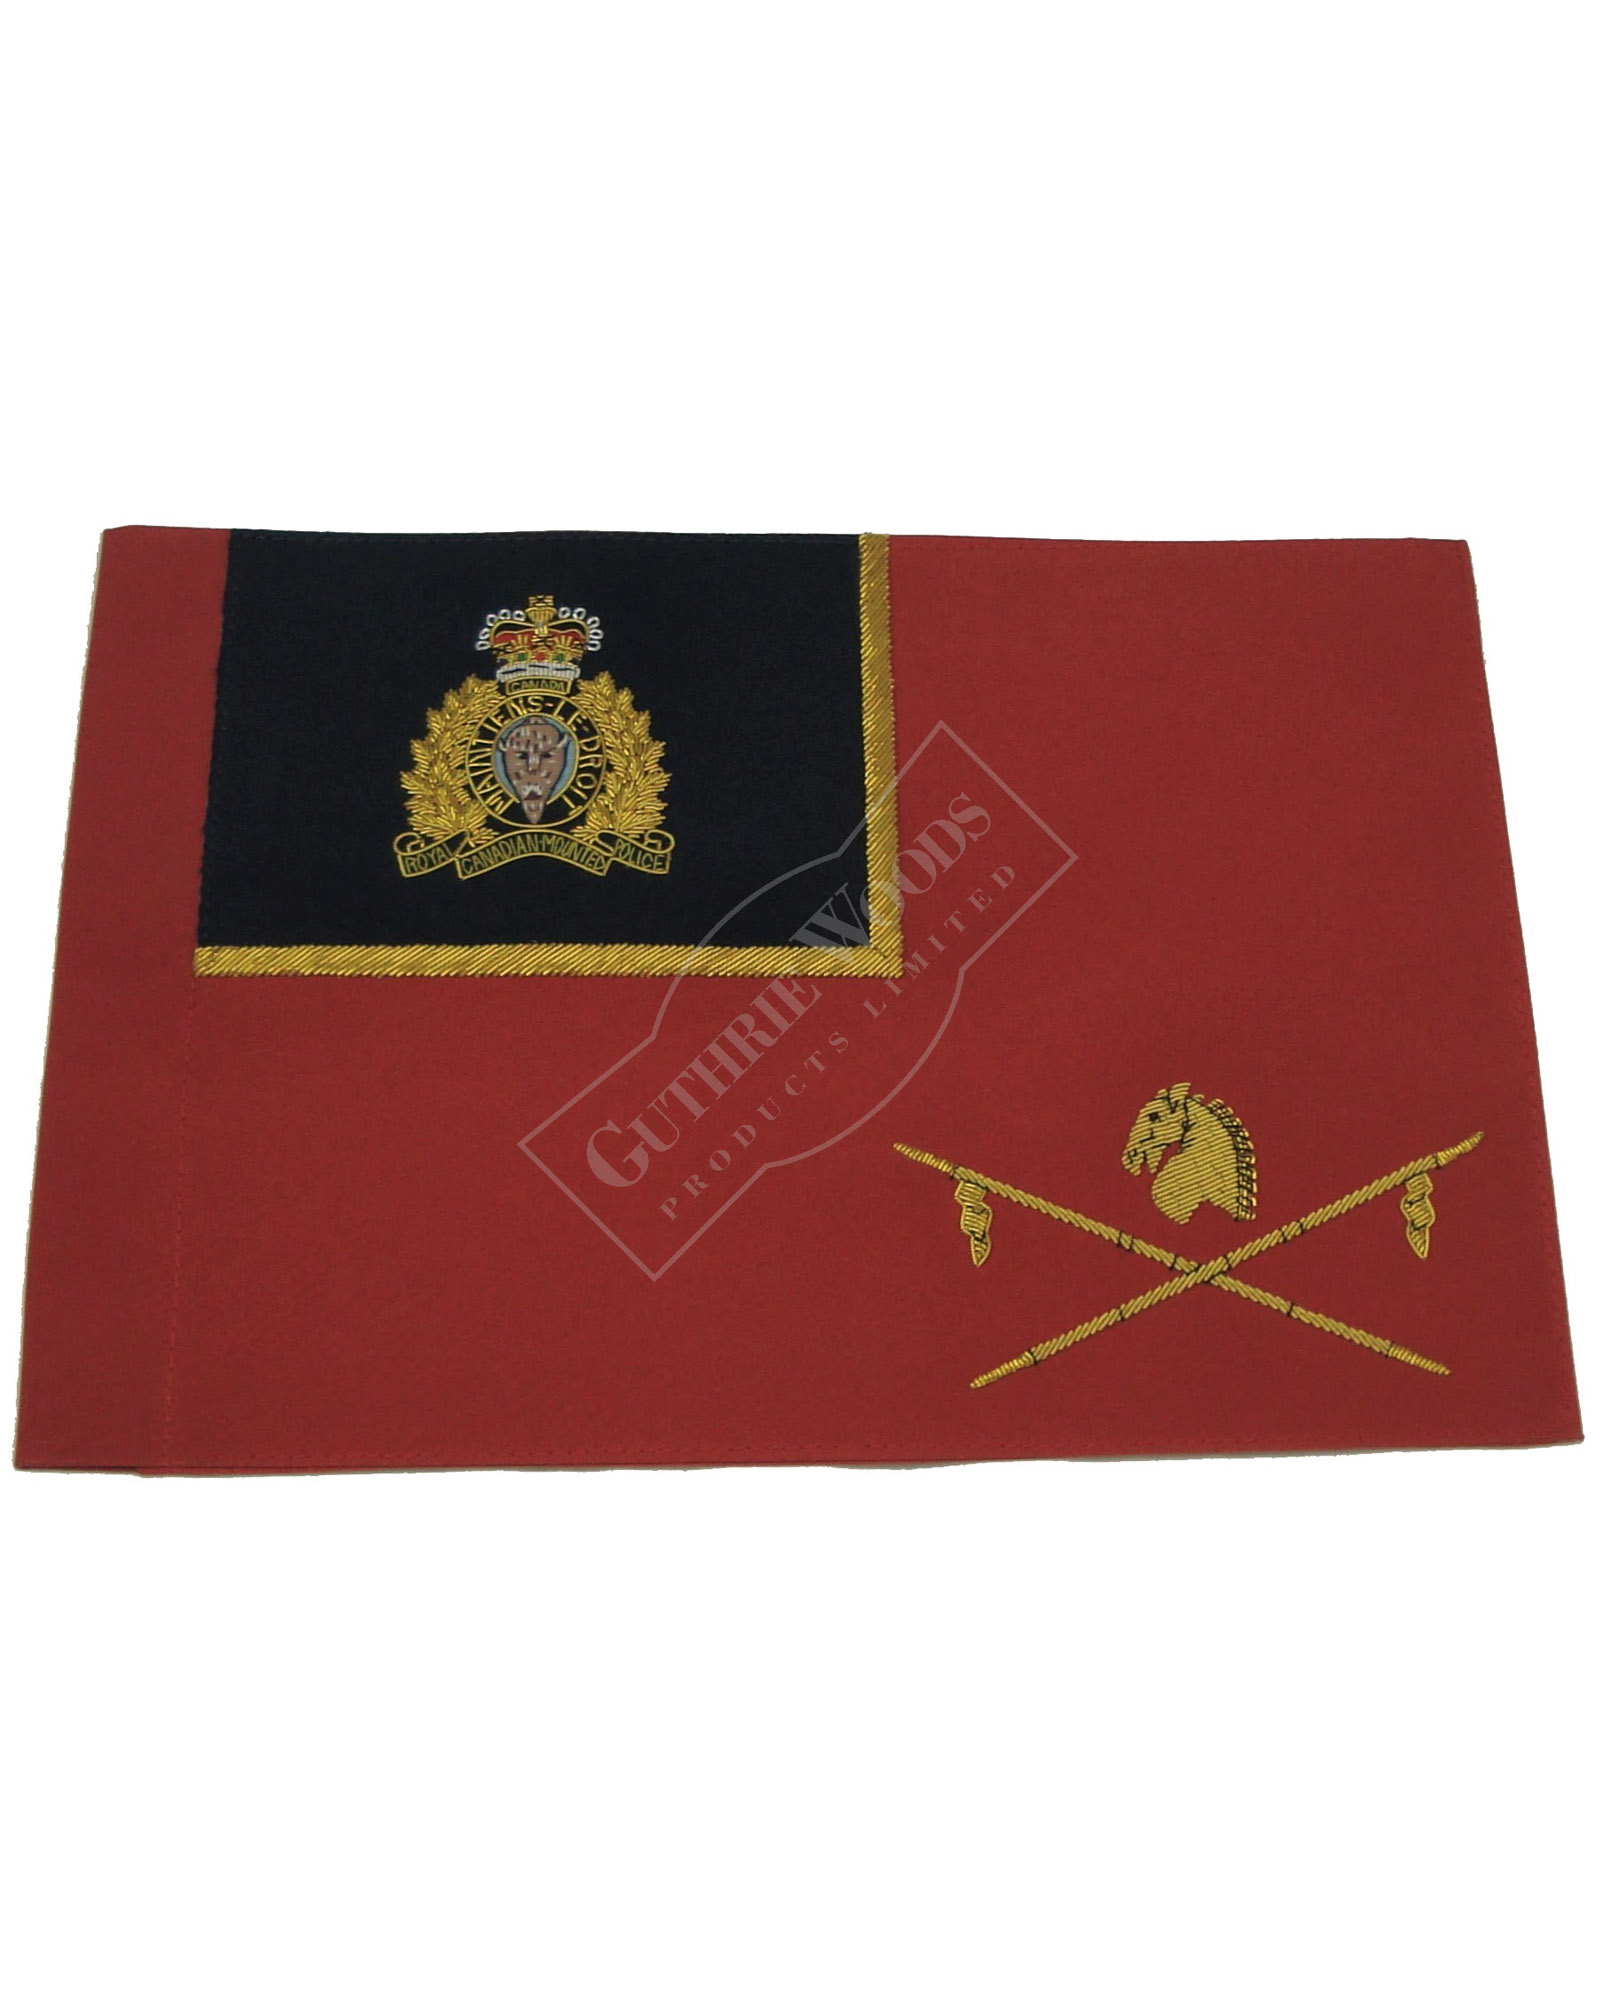 RCMP Miniature Division Ensign R173-MR